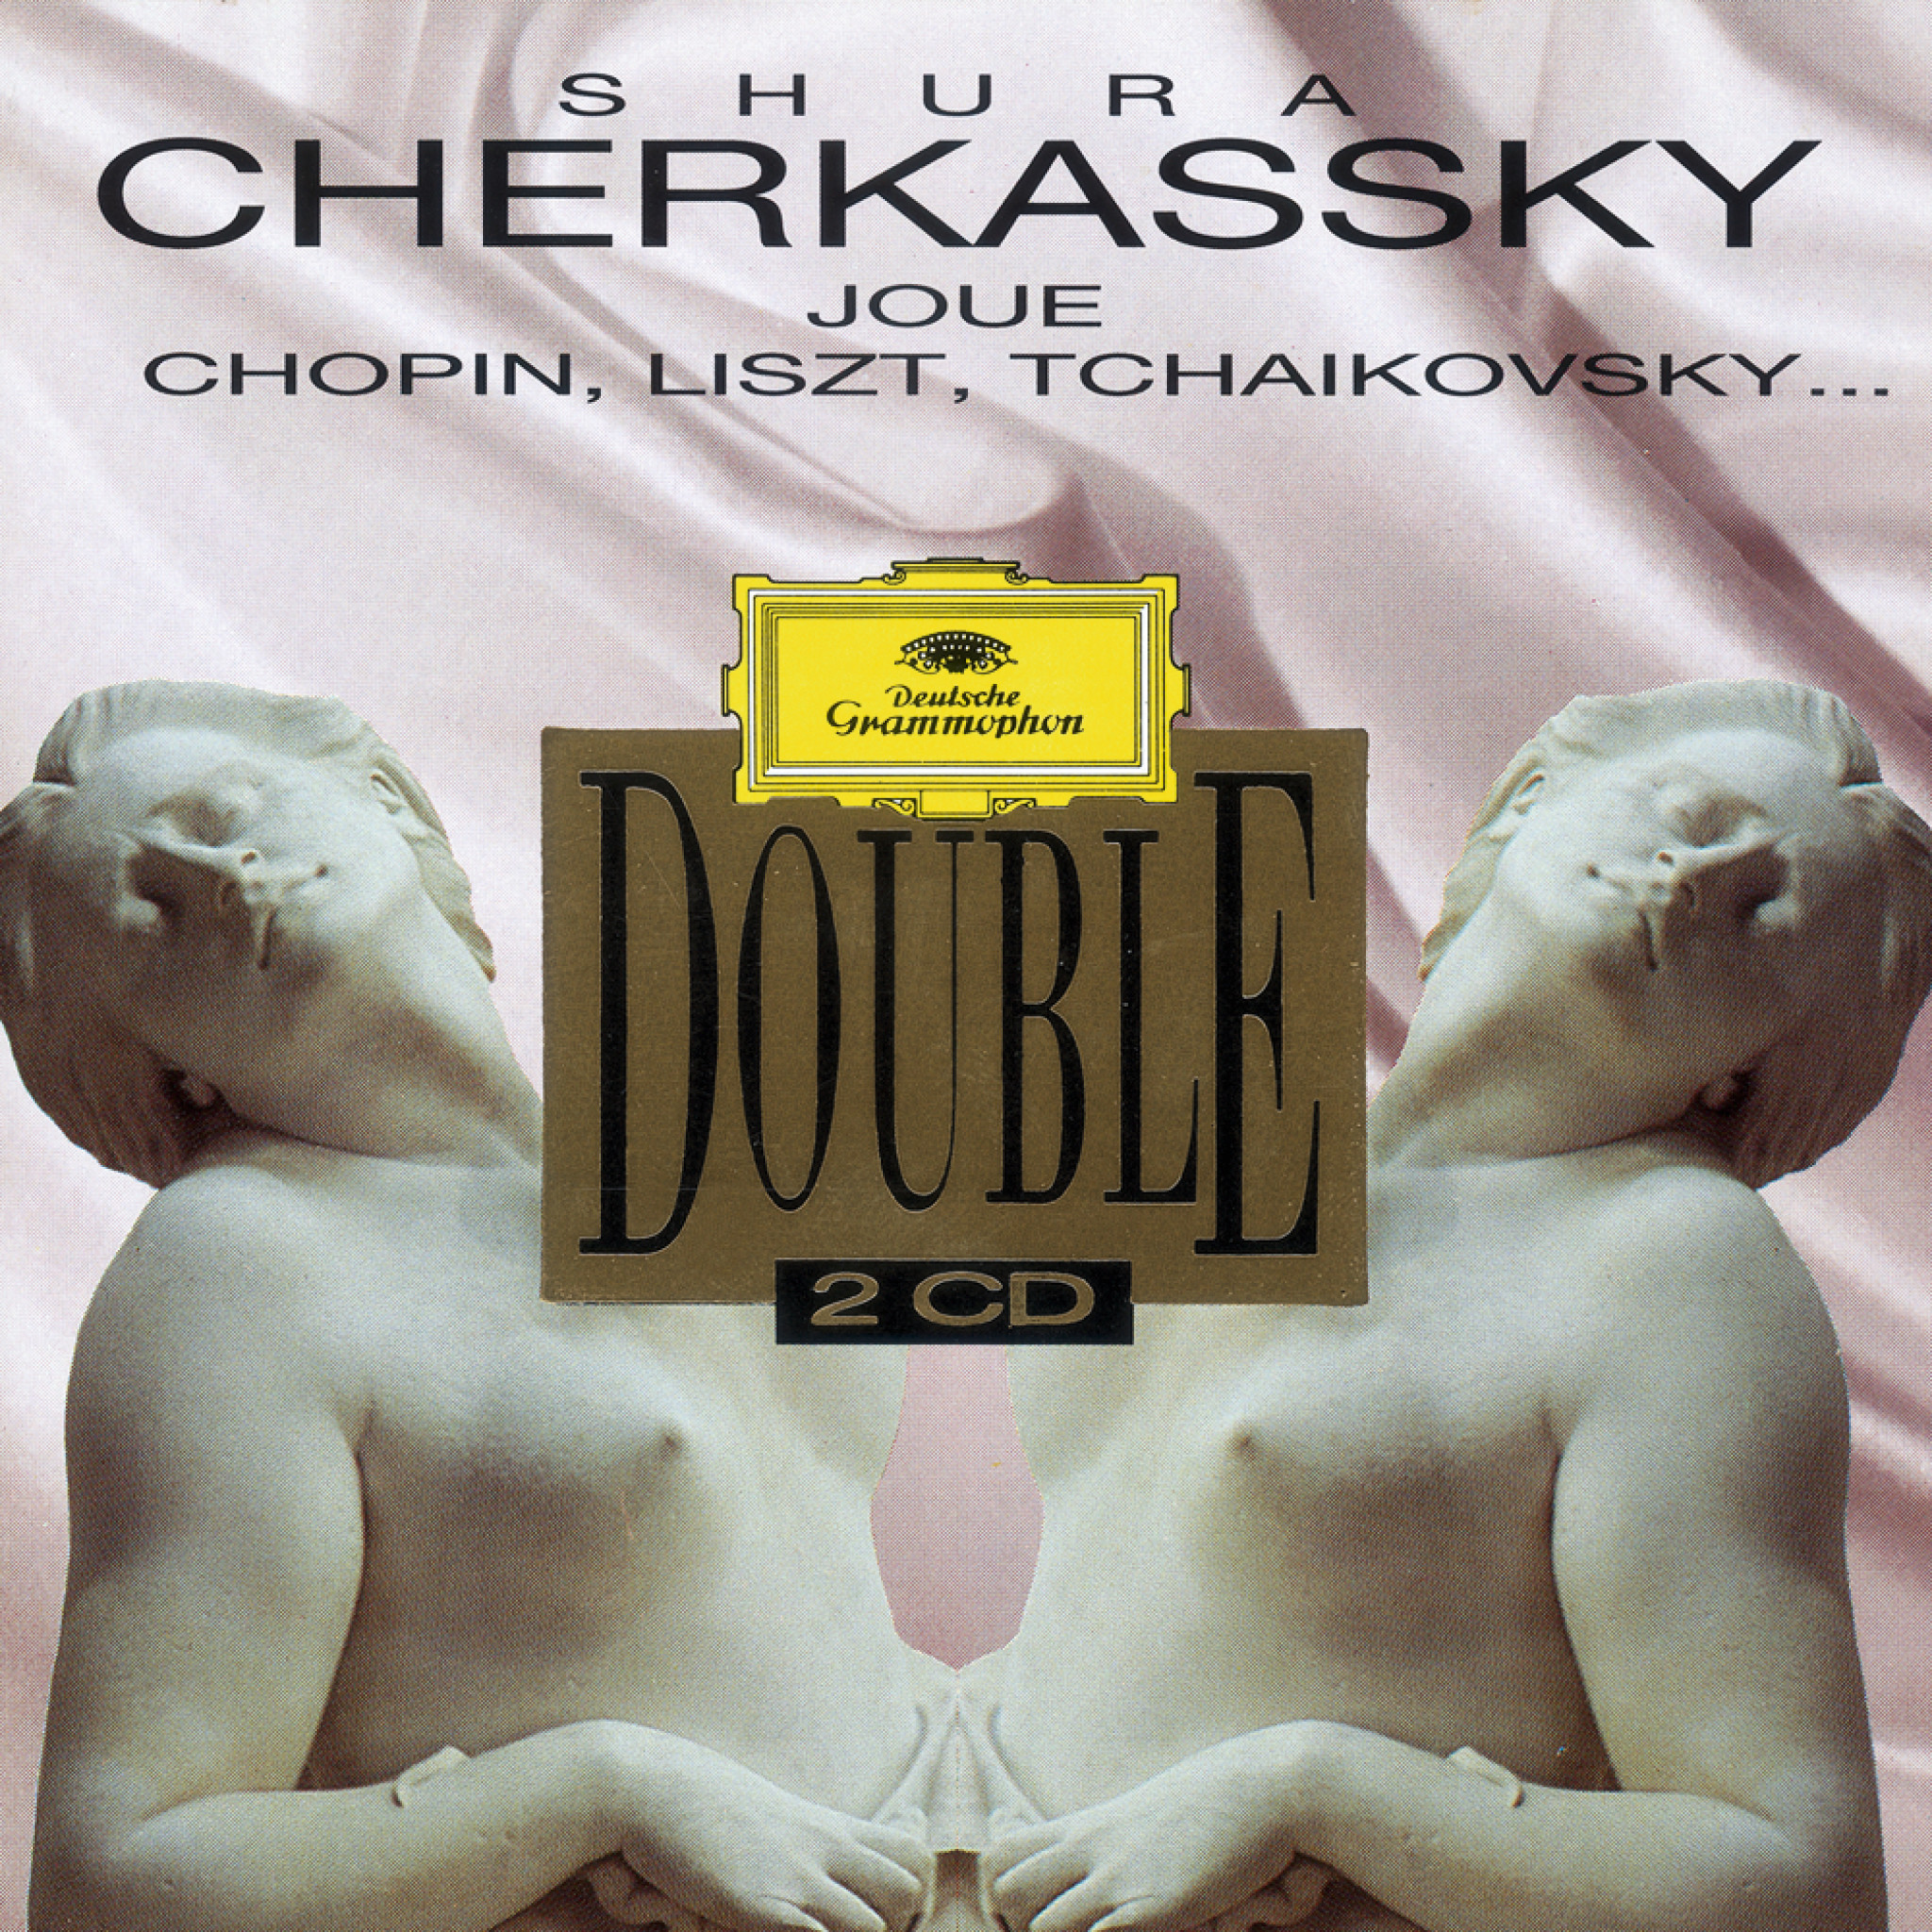 Shura Cherkassky - Chopin, Liszt, Tchaikovsky Cover